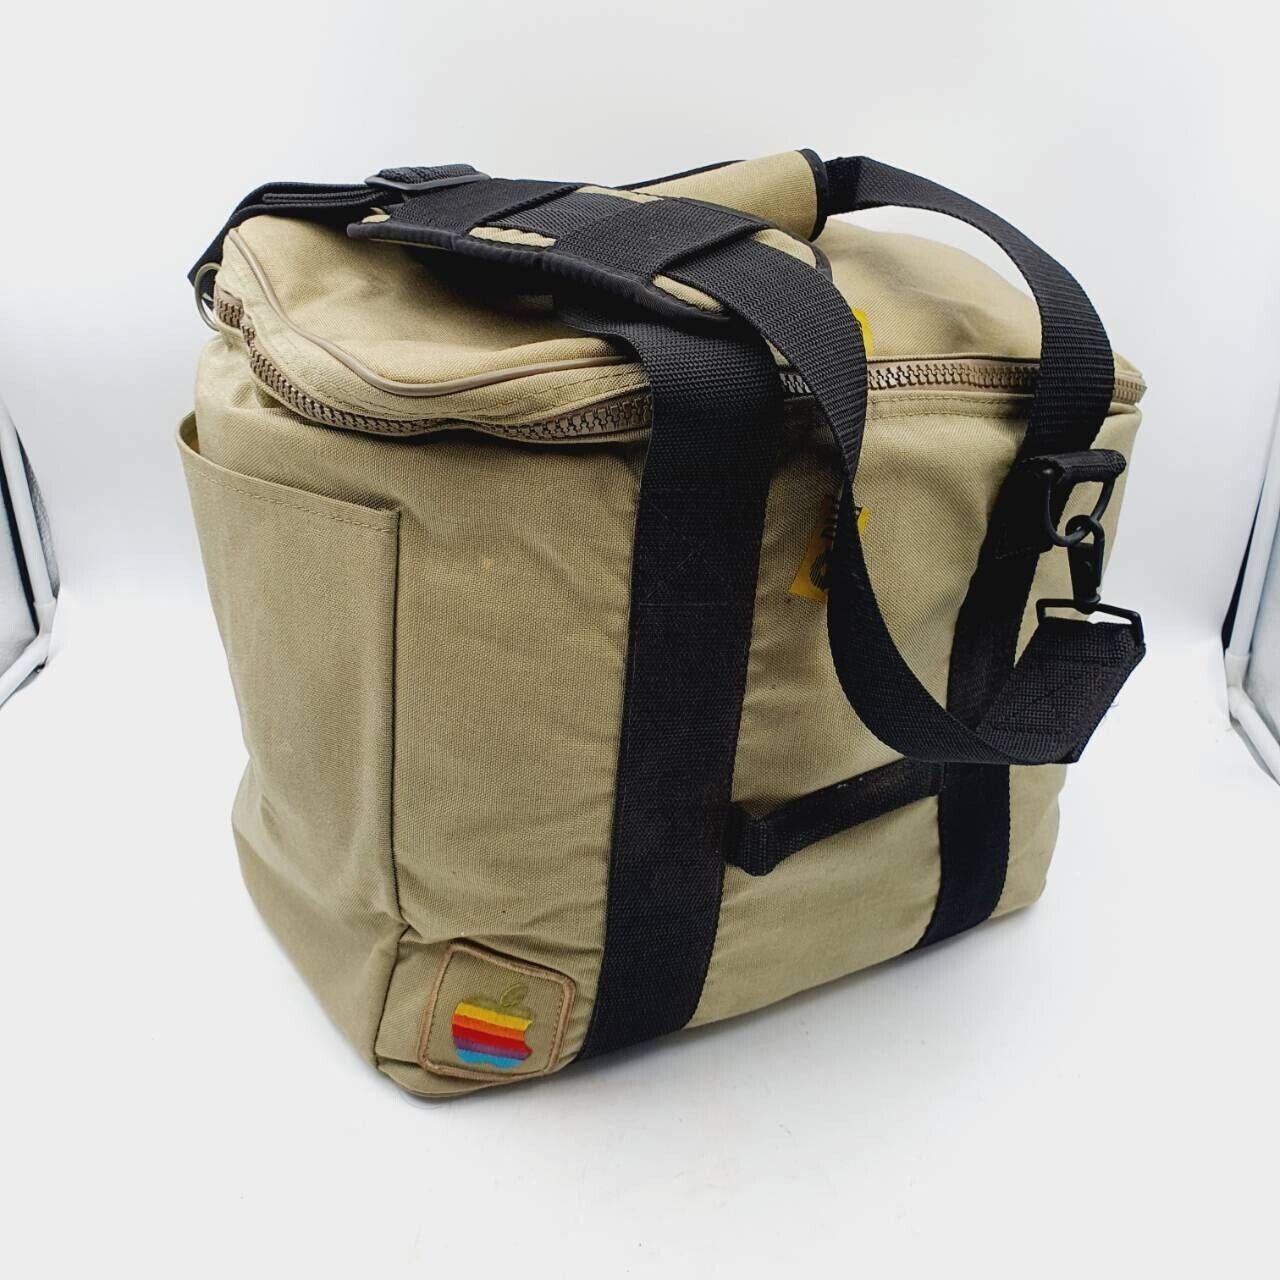 Genuine Carry Bag - Apple Macintosh 512k, 1986